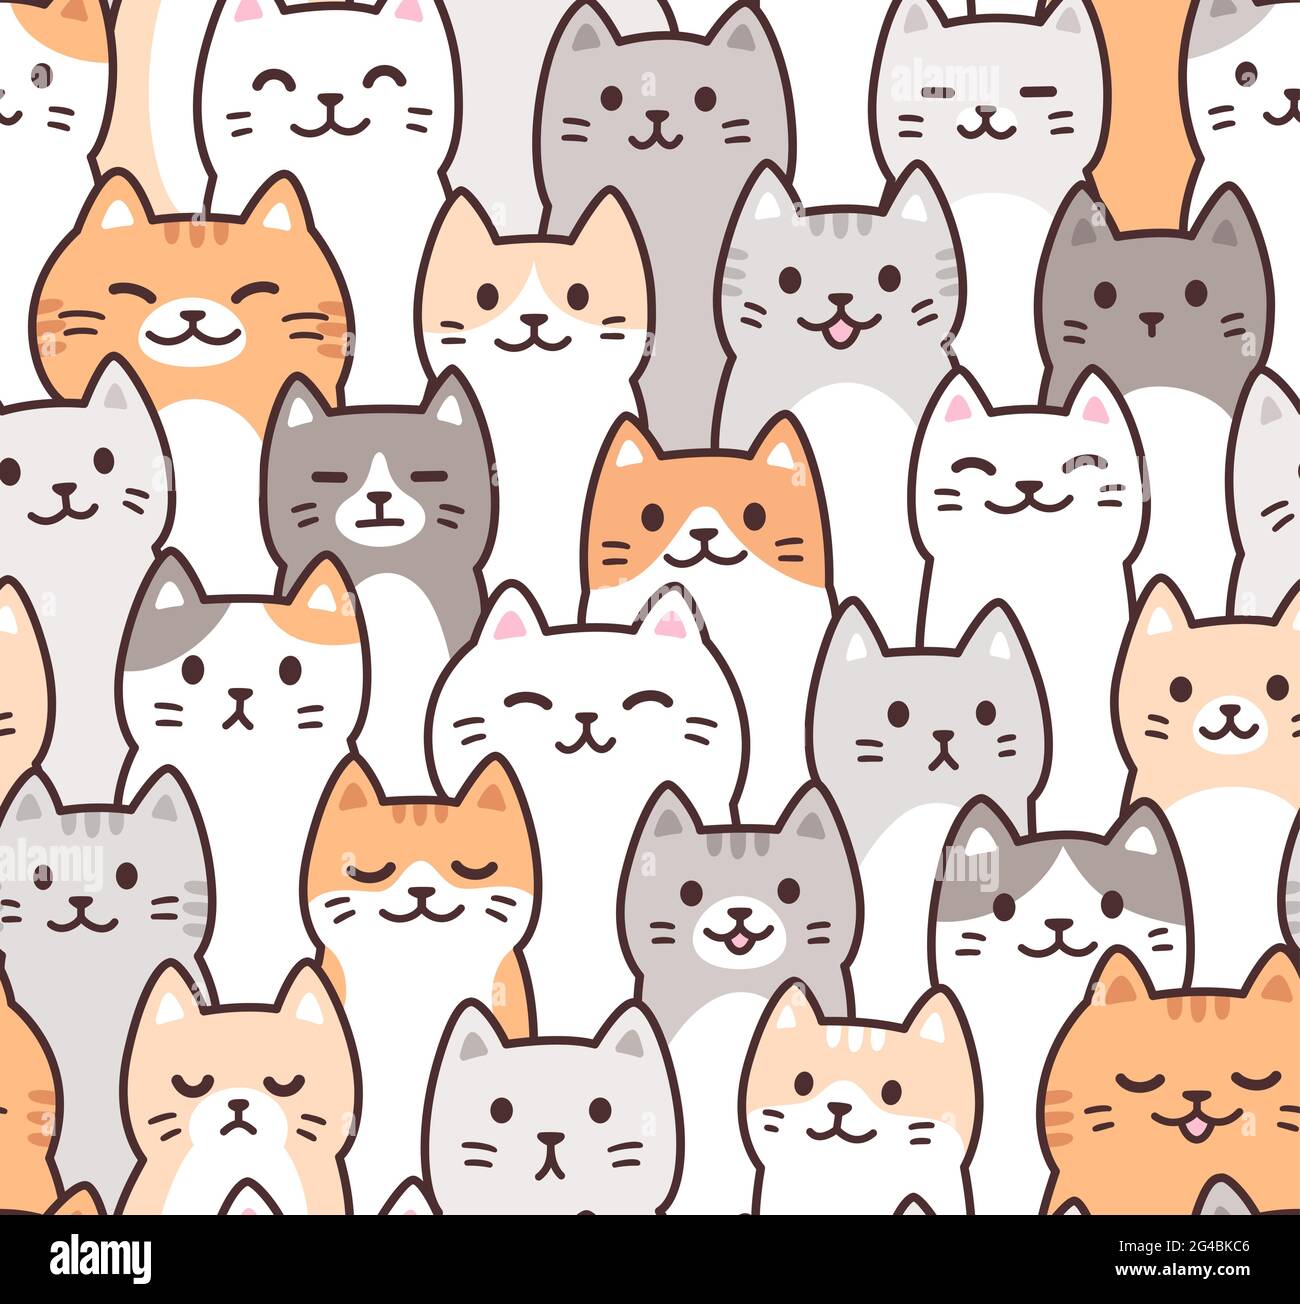 Cute cartoon doodle cats pattern. Kawaii crowd of cat faces. Seamless ...